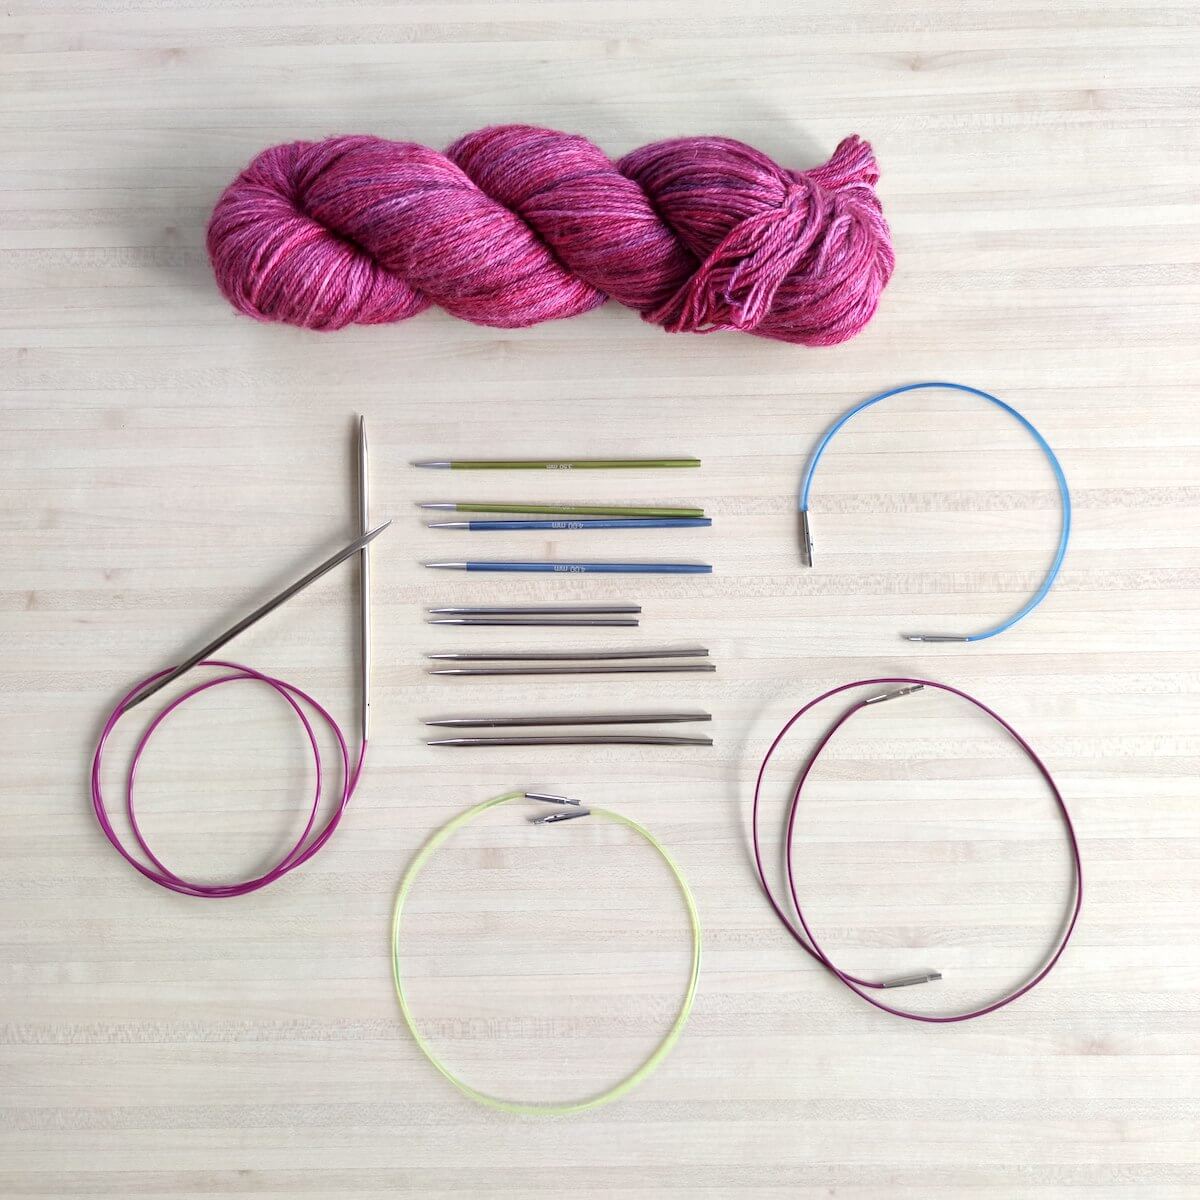 Aiguilles à tricoter 2,75 mm Aiguilles à tricoter circulaires Aiguilles à tricoter circulaires en acier inoxydable avec câble flexible Coopay Aiguilles à tricoter circulaires 100 cm 